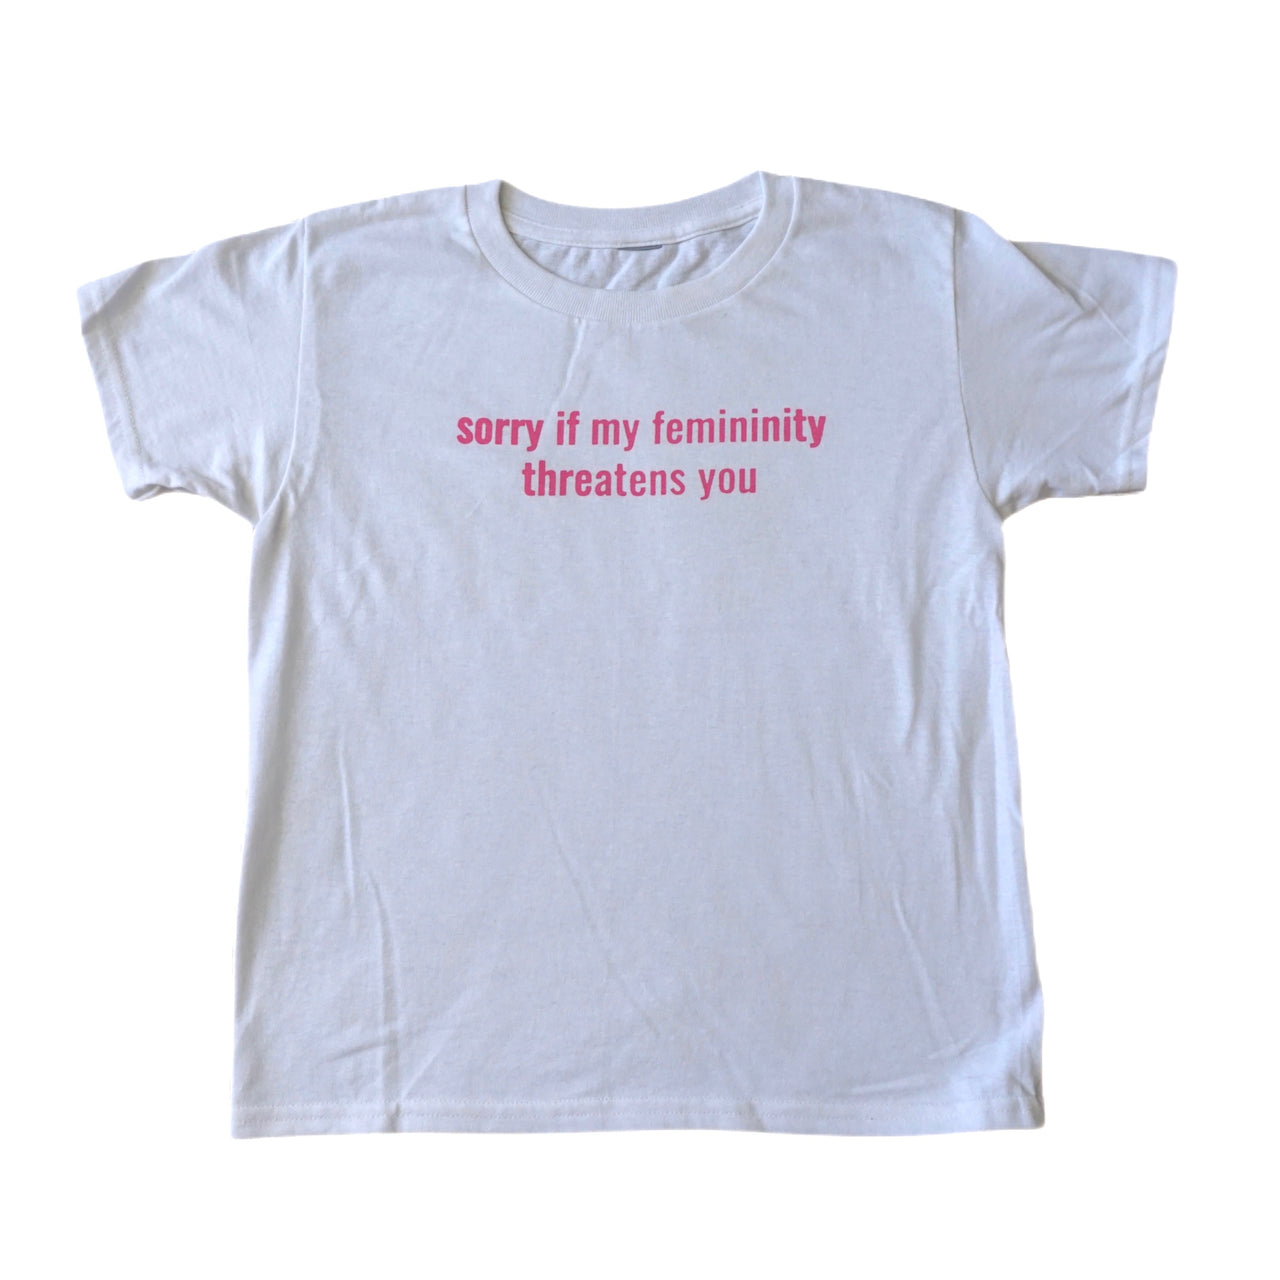 MISPRINT sorry if my femininity threatens you tee